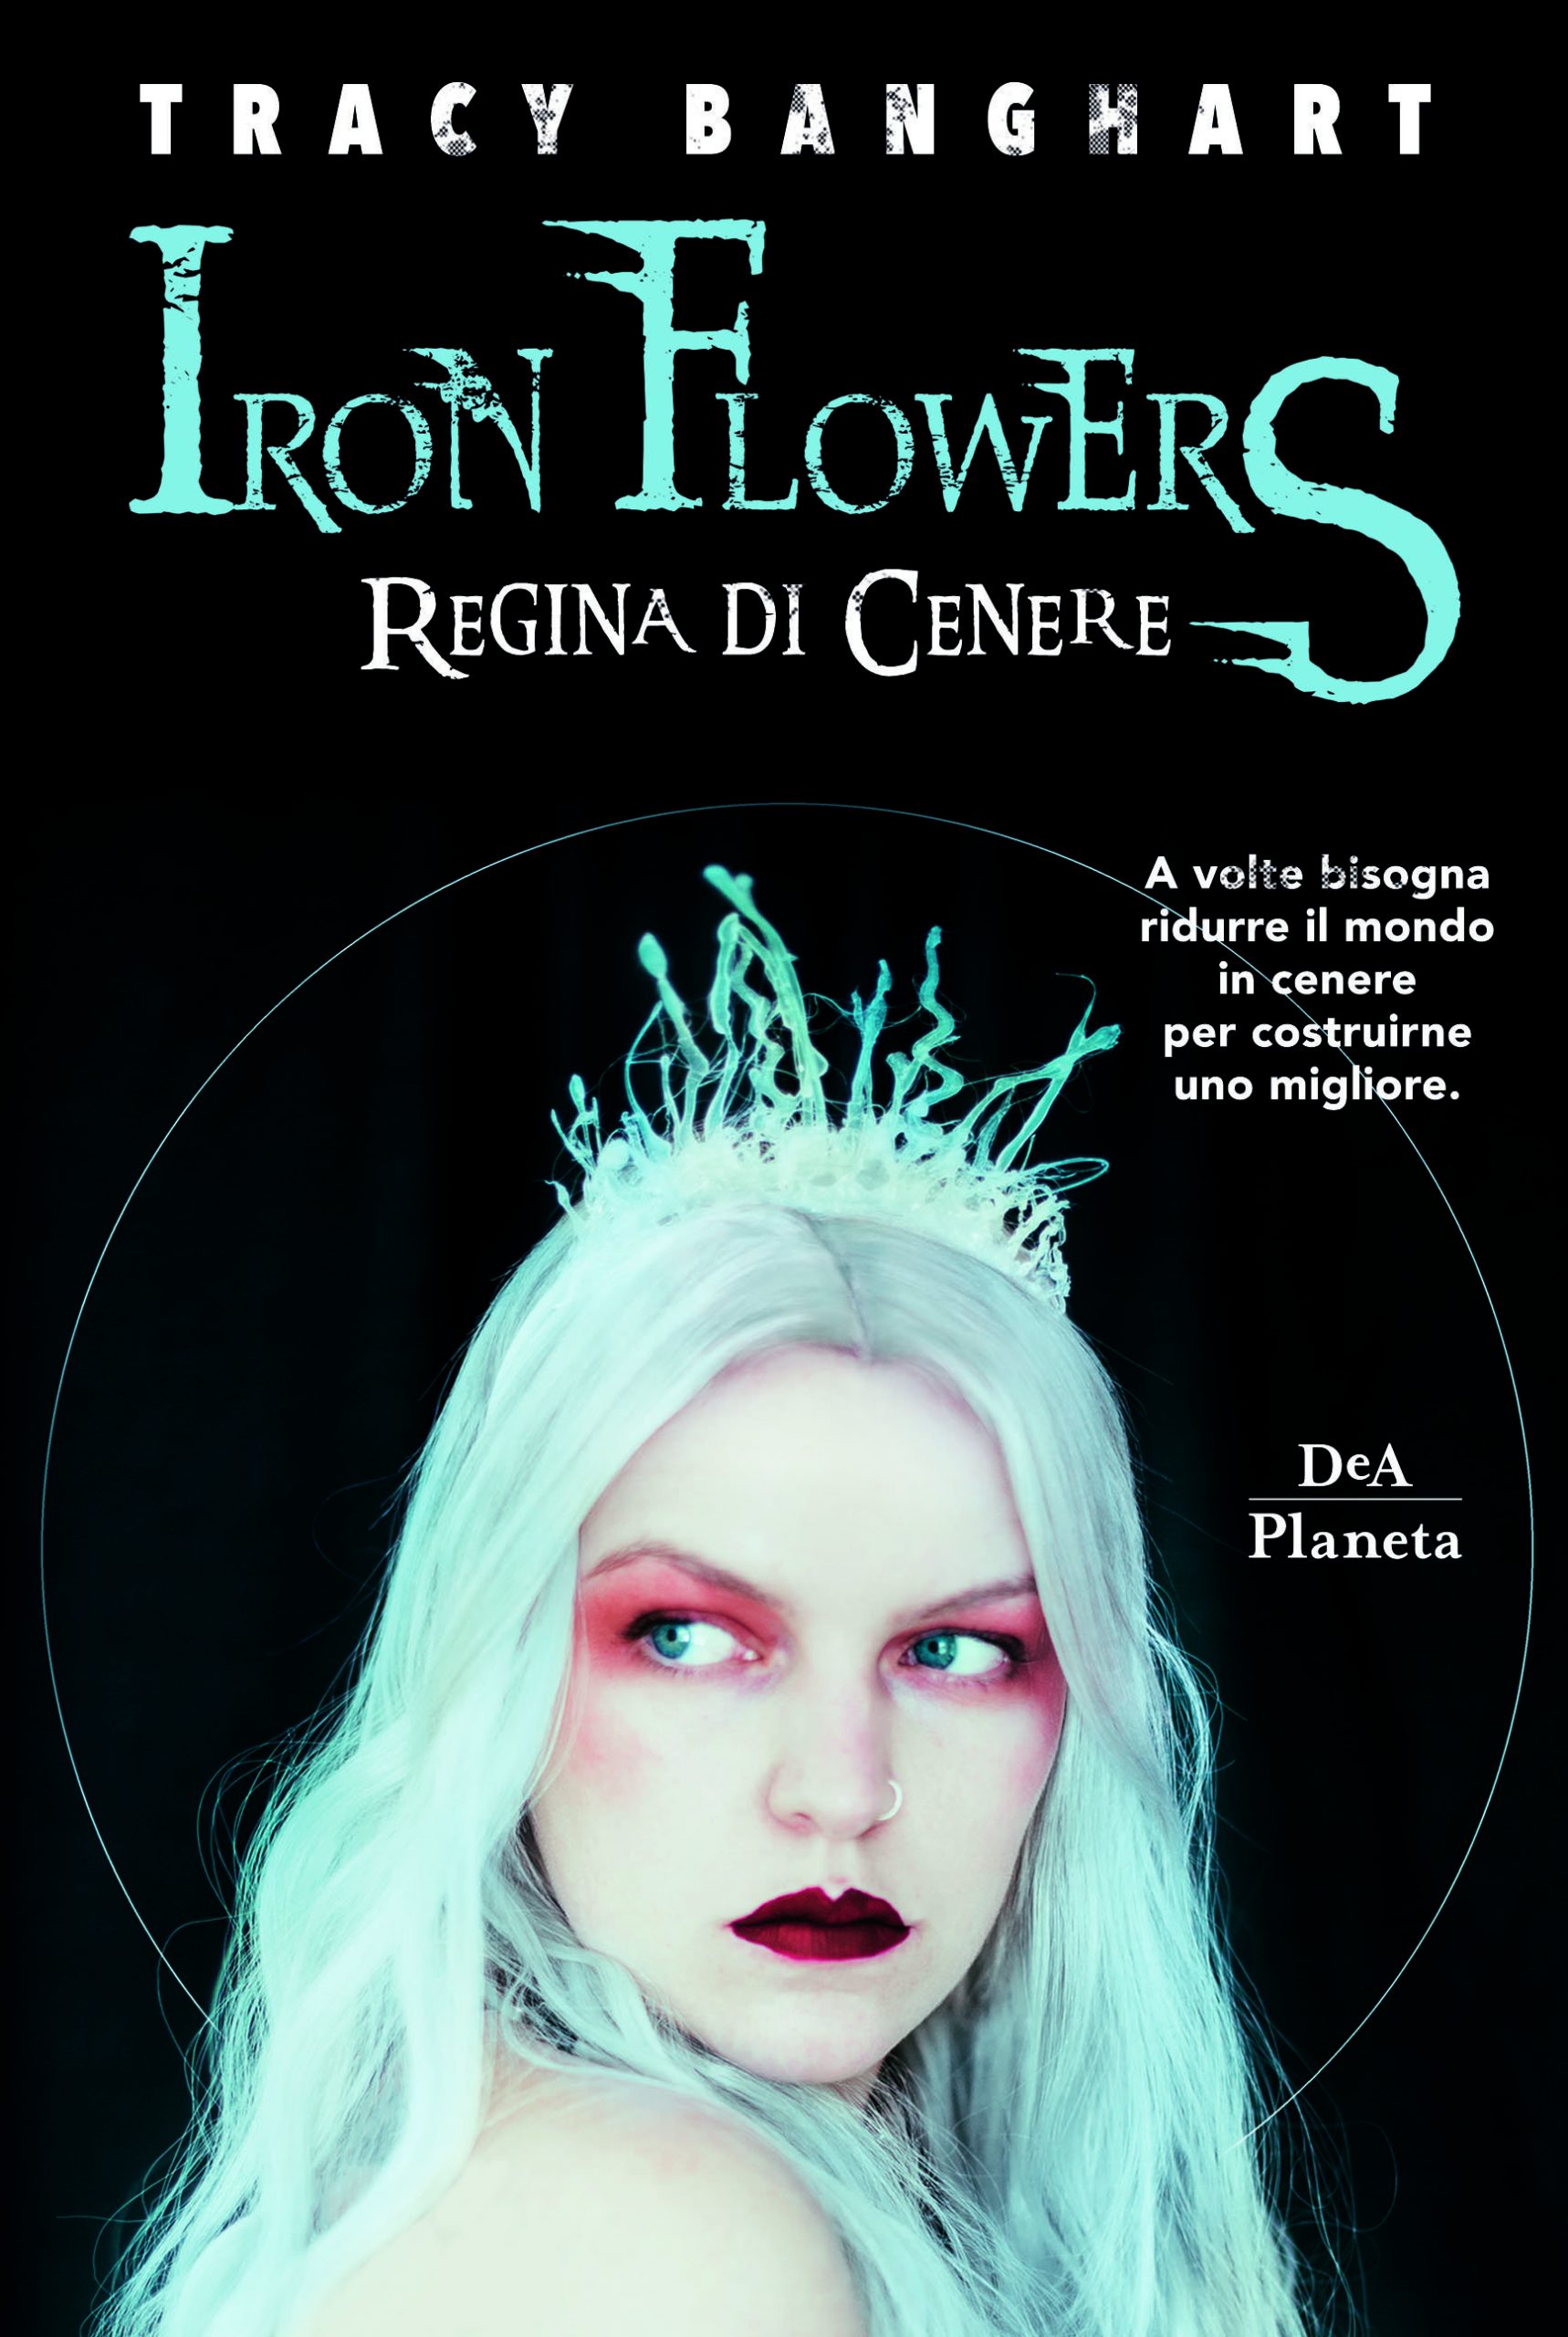 Recensione: “Iron Flowers. Regina di cenere” di Tracy Banghart